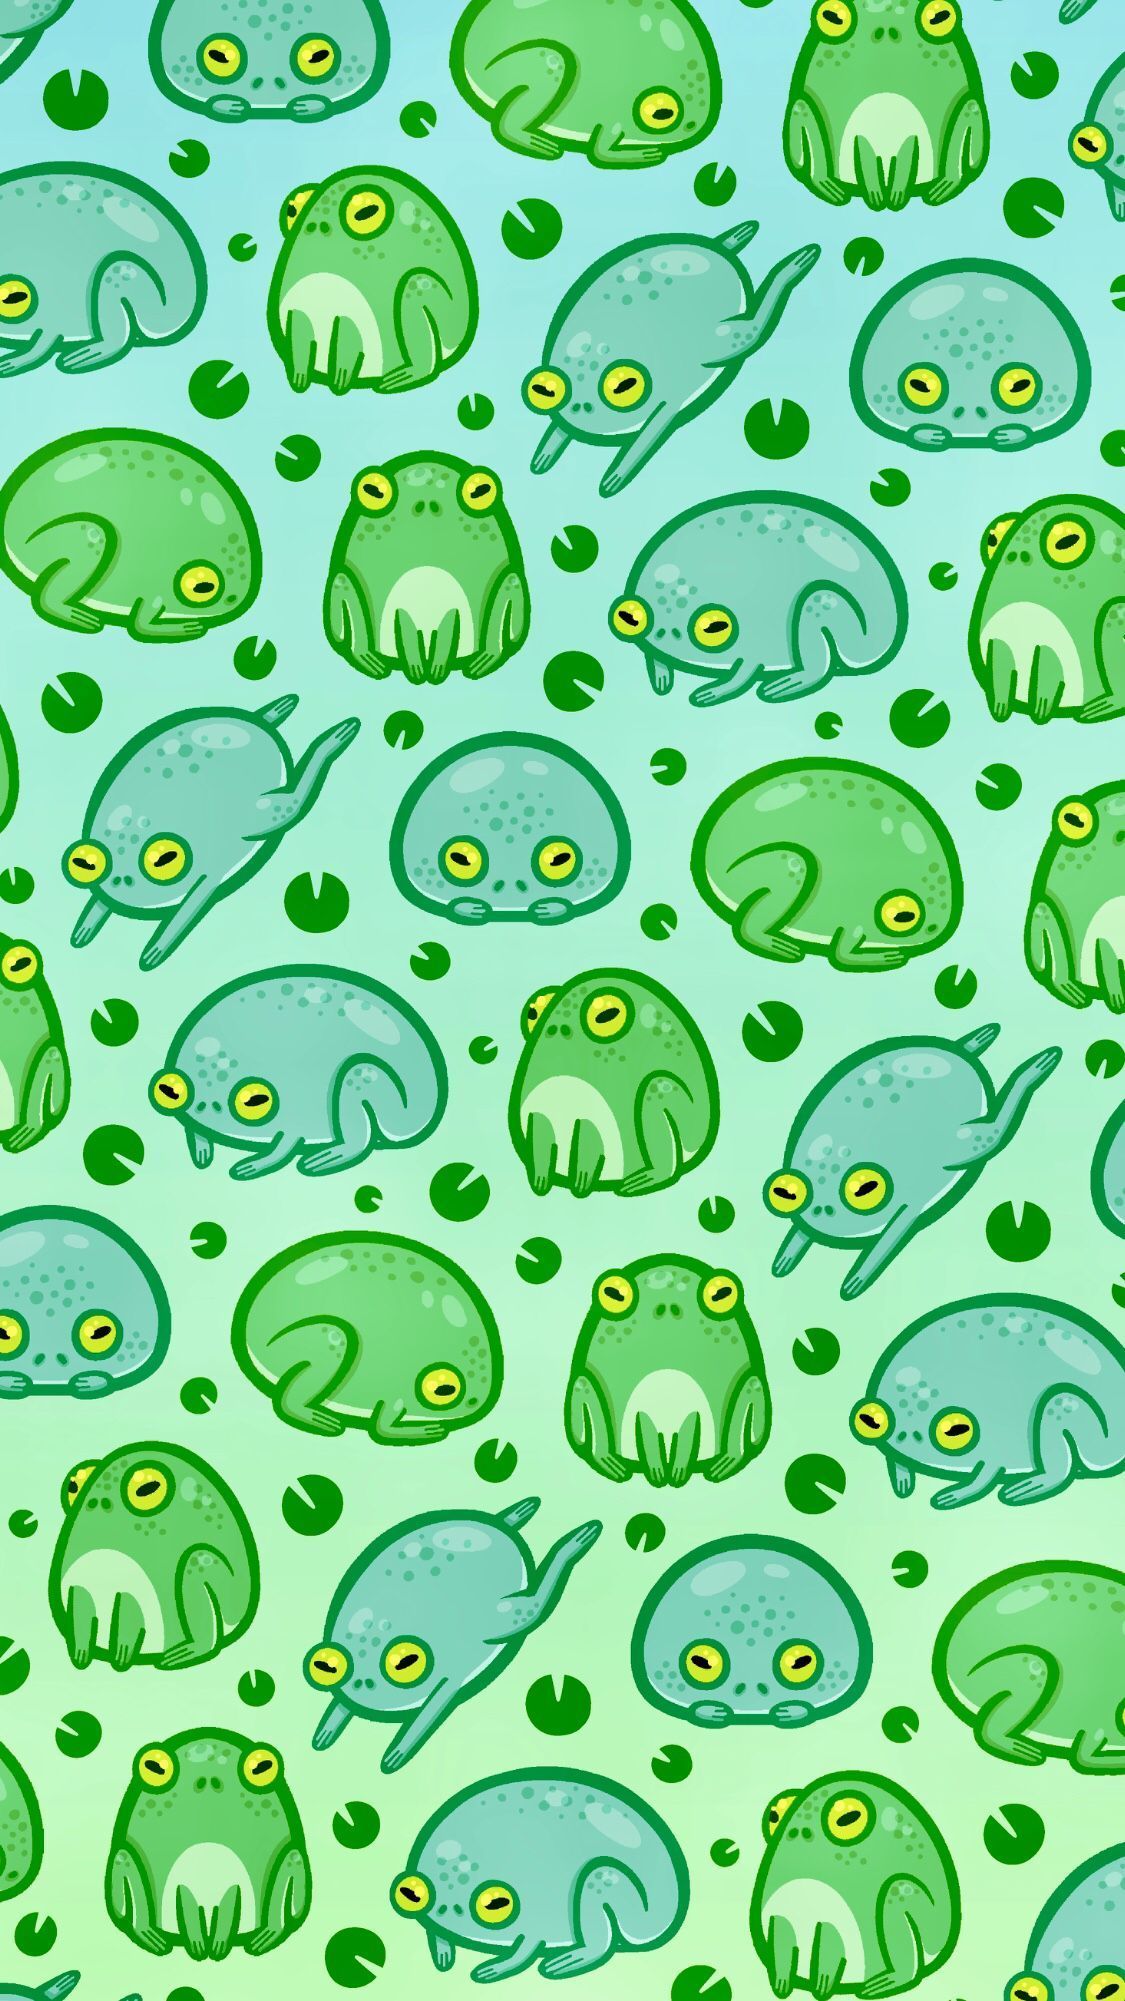 Frog wallpaper, Cute patterns wallpaper, Frog art